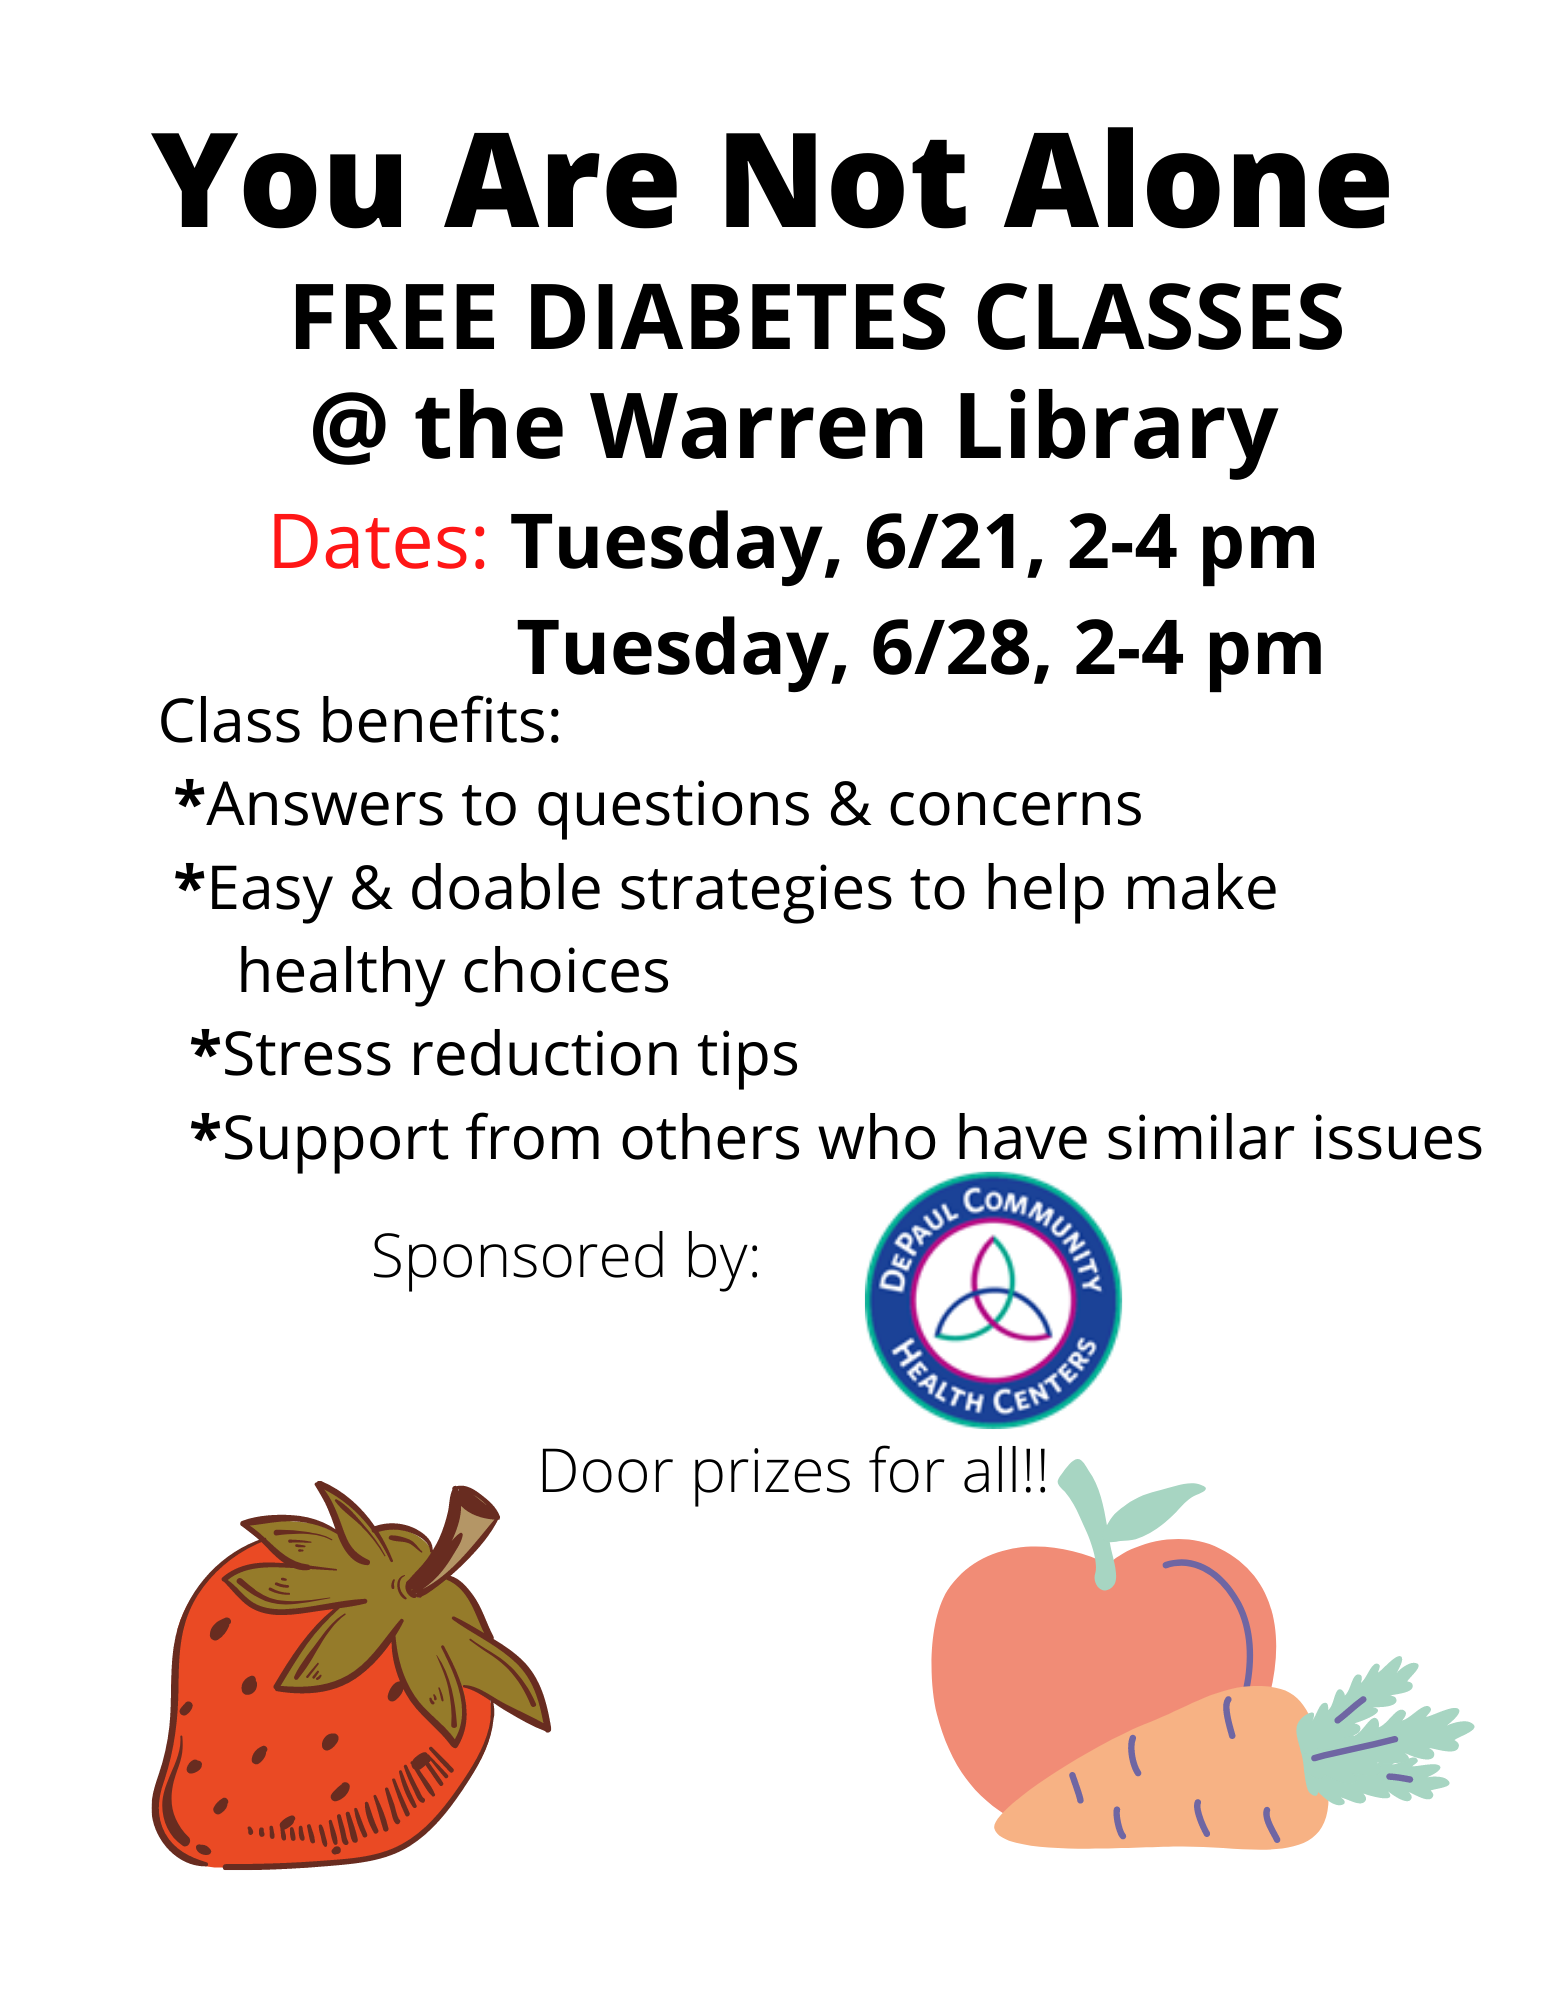 FREE DIABETES CLASS